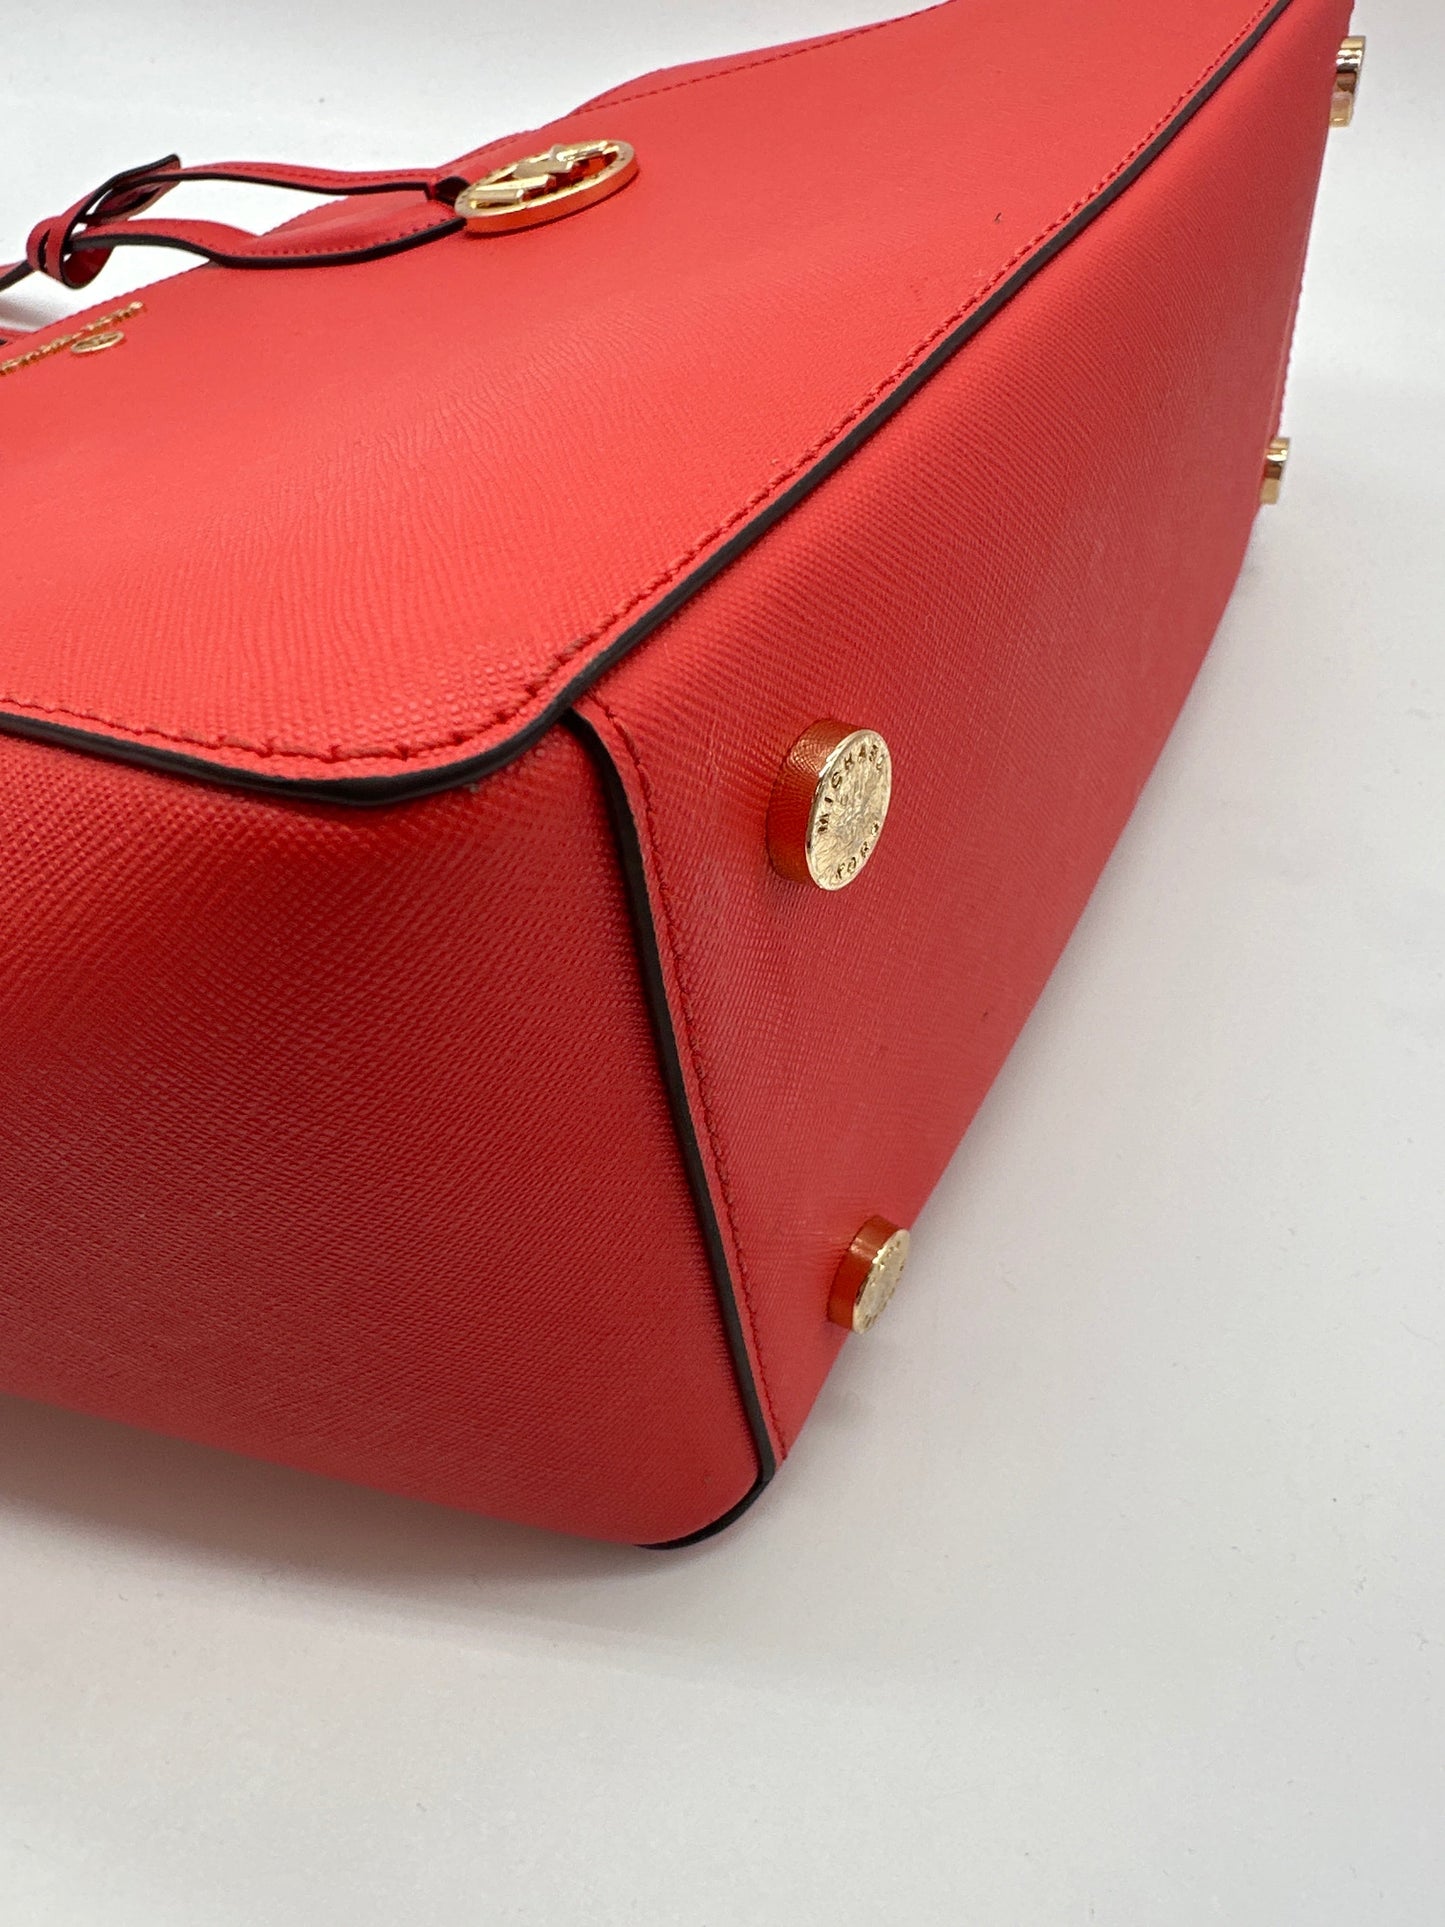 Handbag Designer Michael Kors, Size Medium